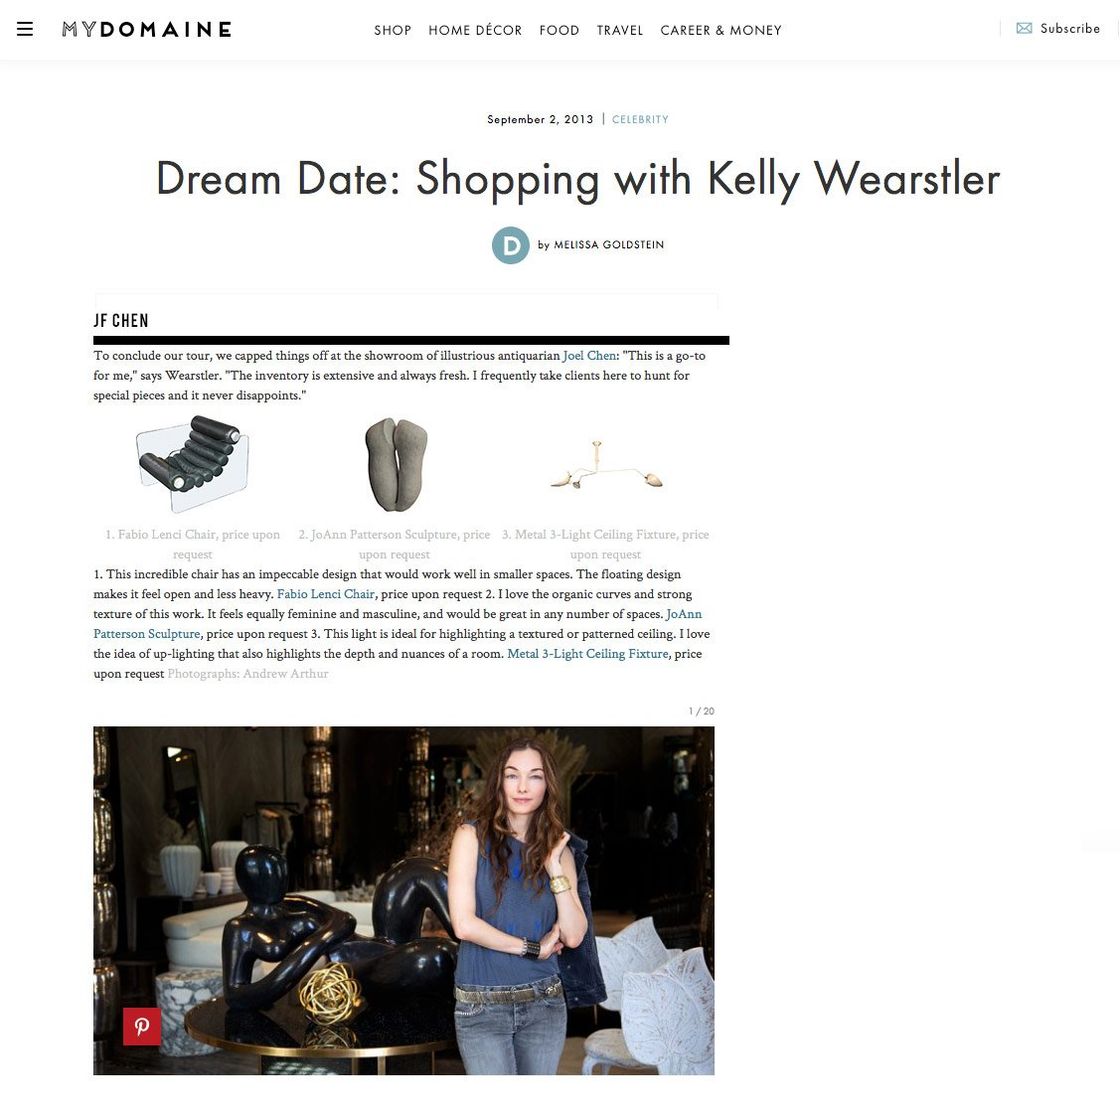 Dream Date: Shopping with Kelly Wearstler